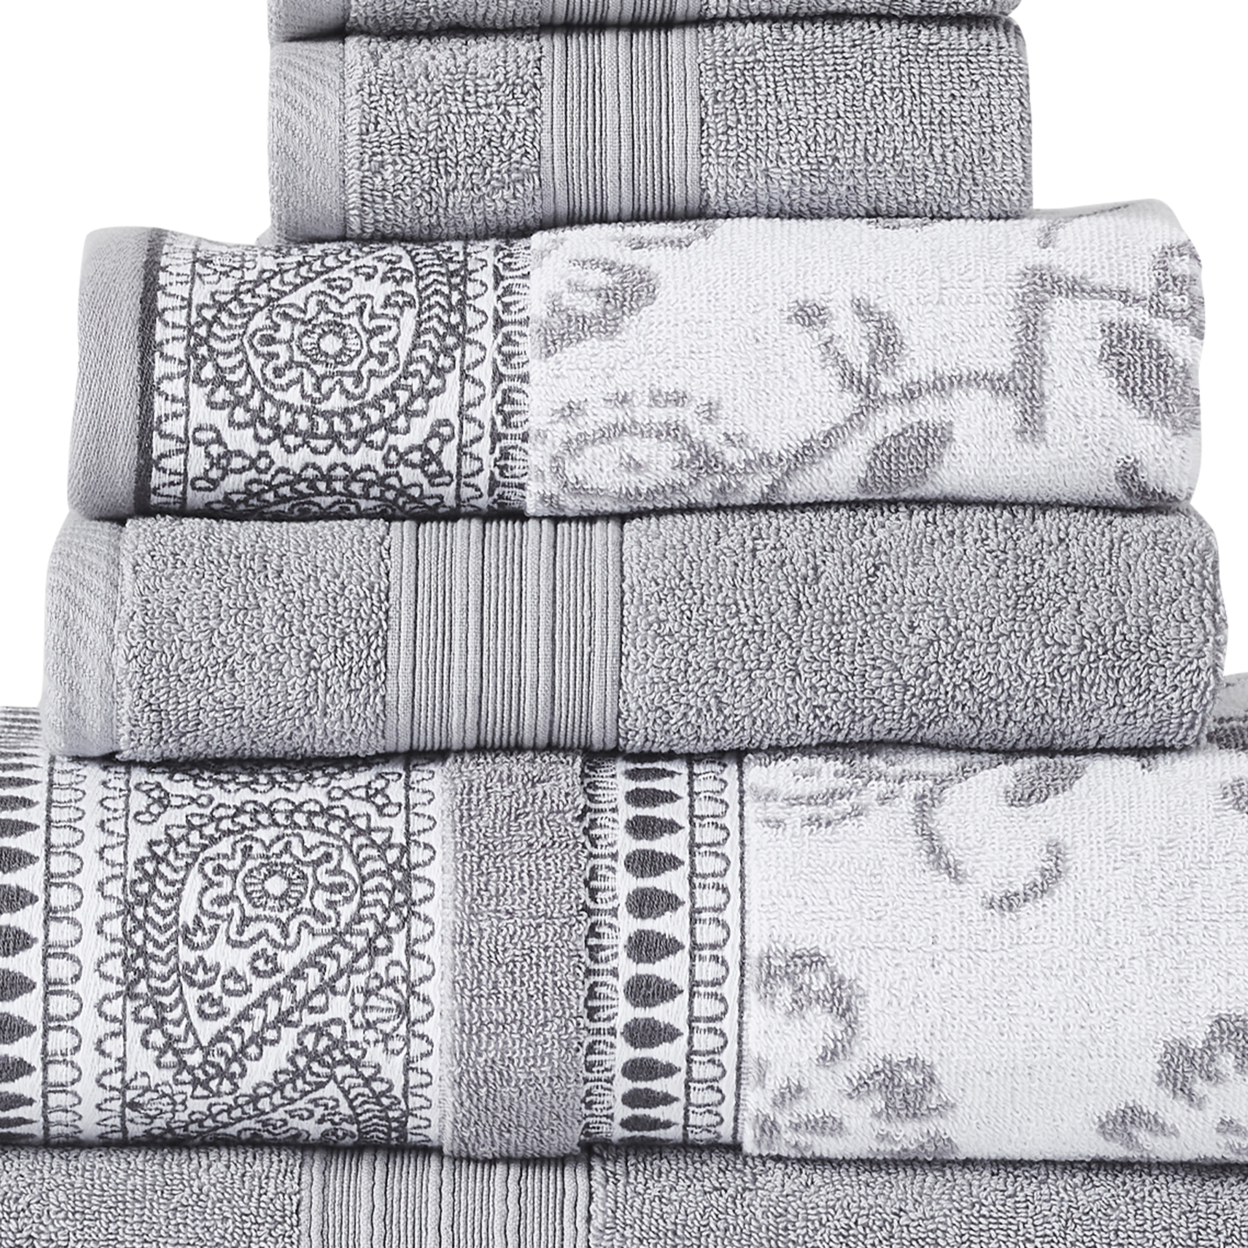 Veria 6 Piece Towel Set With Paisley And Floral Motif Pattern The Urban Port, Gray- Saltoro Sherpi